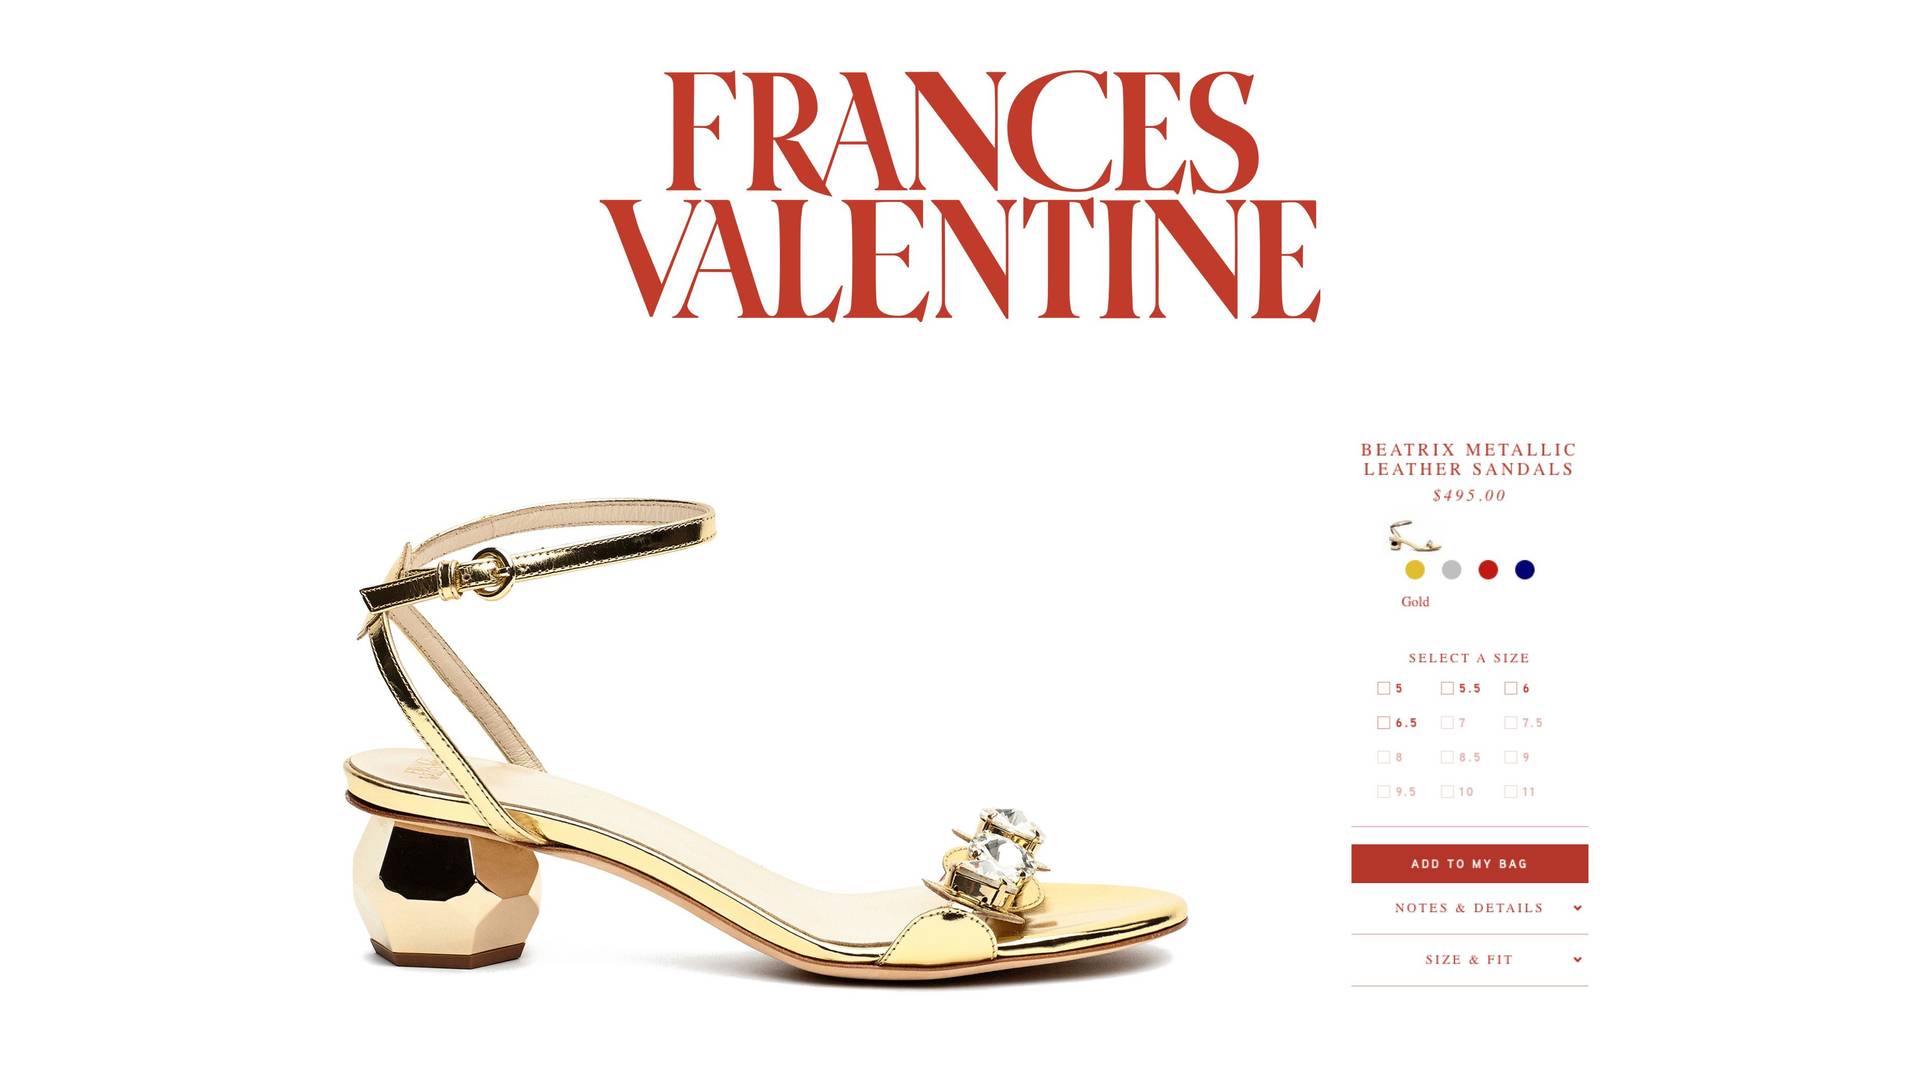 Frances Valentine Shoes Product Page | Francesvalentine.com